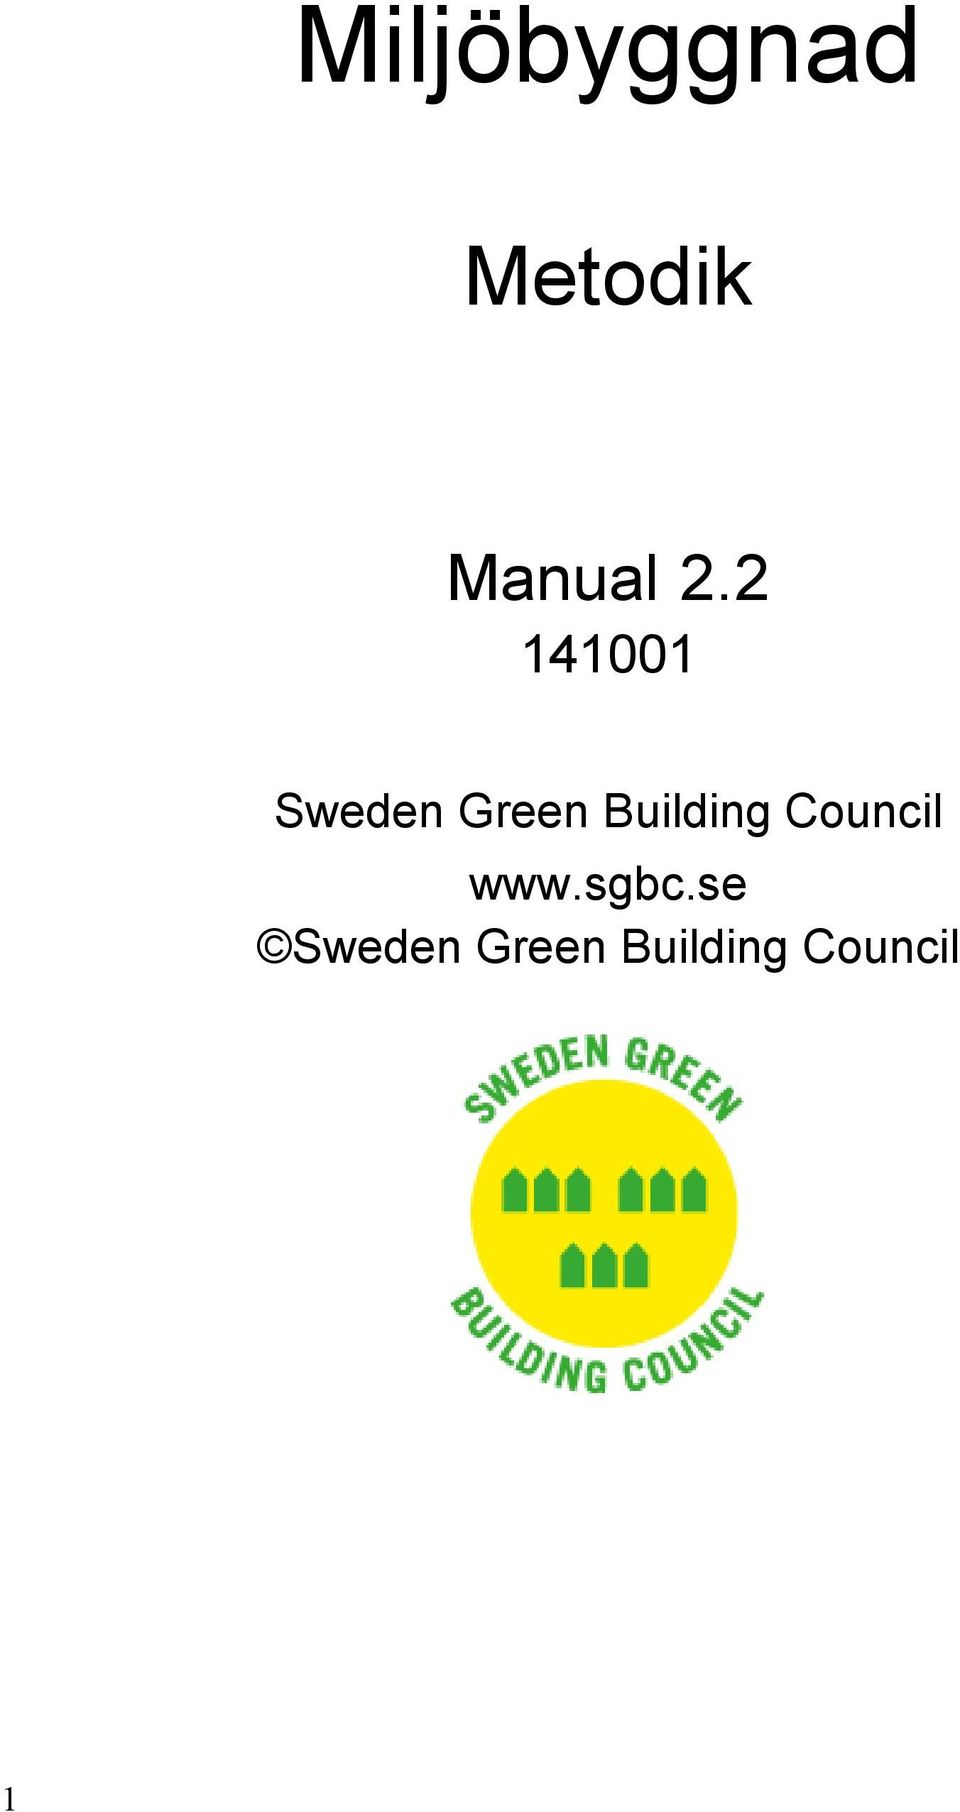 Building Council www.sgbc.